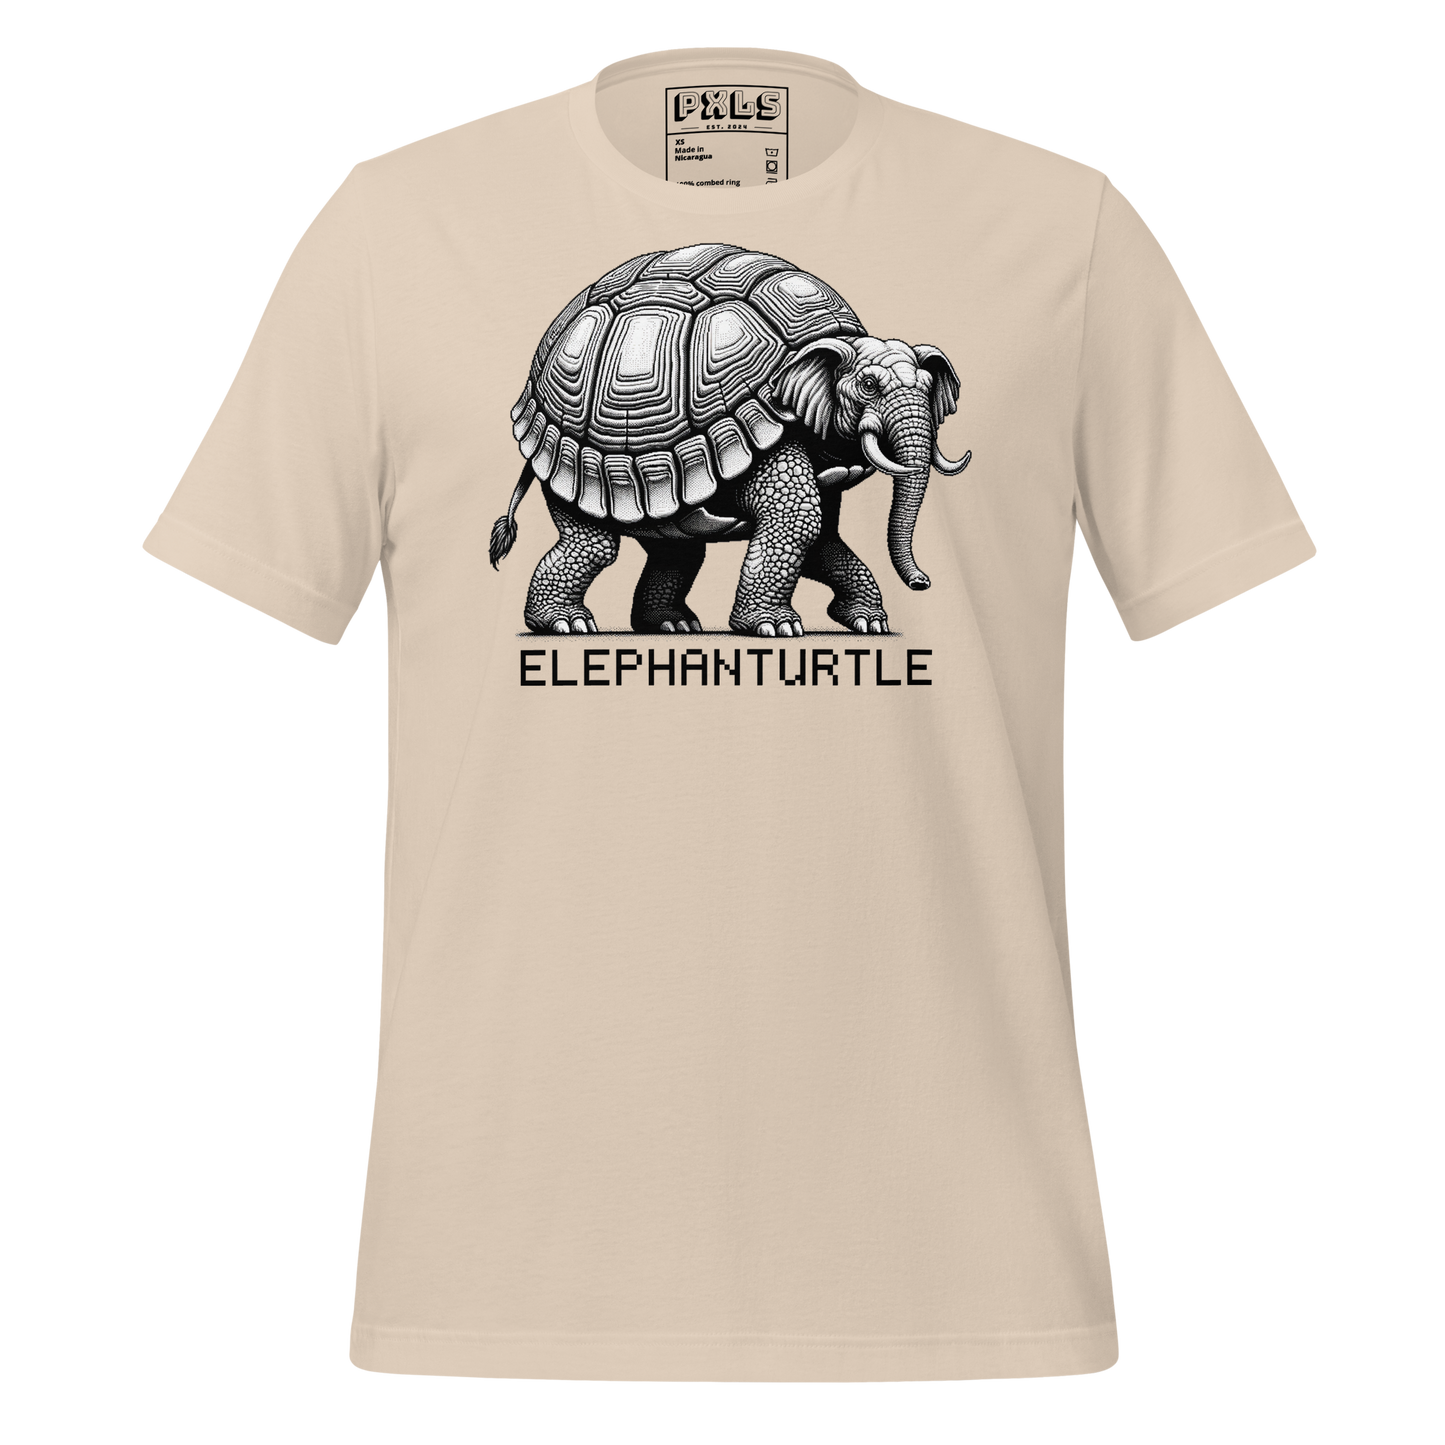 "Elephanturtle" Unisex Shirt w/ Text